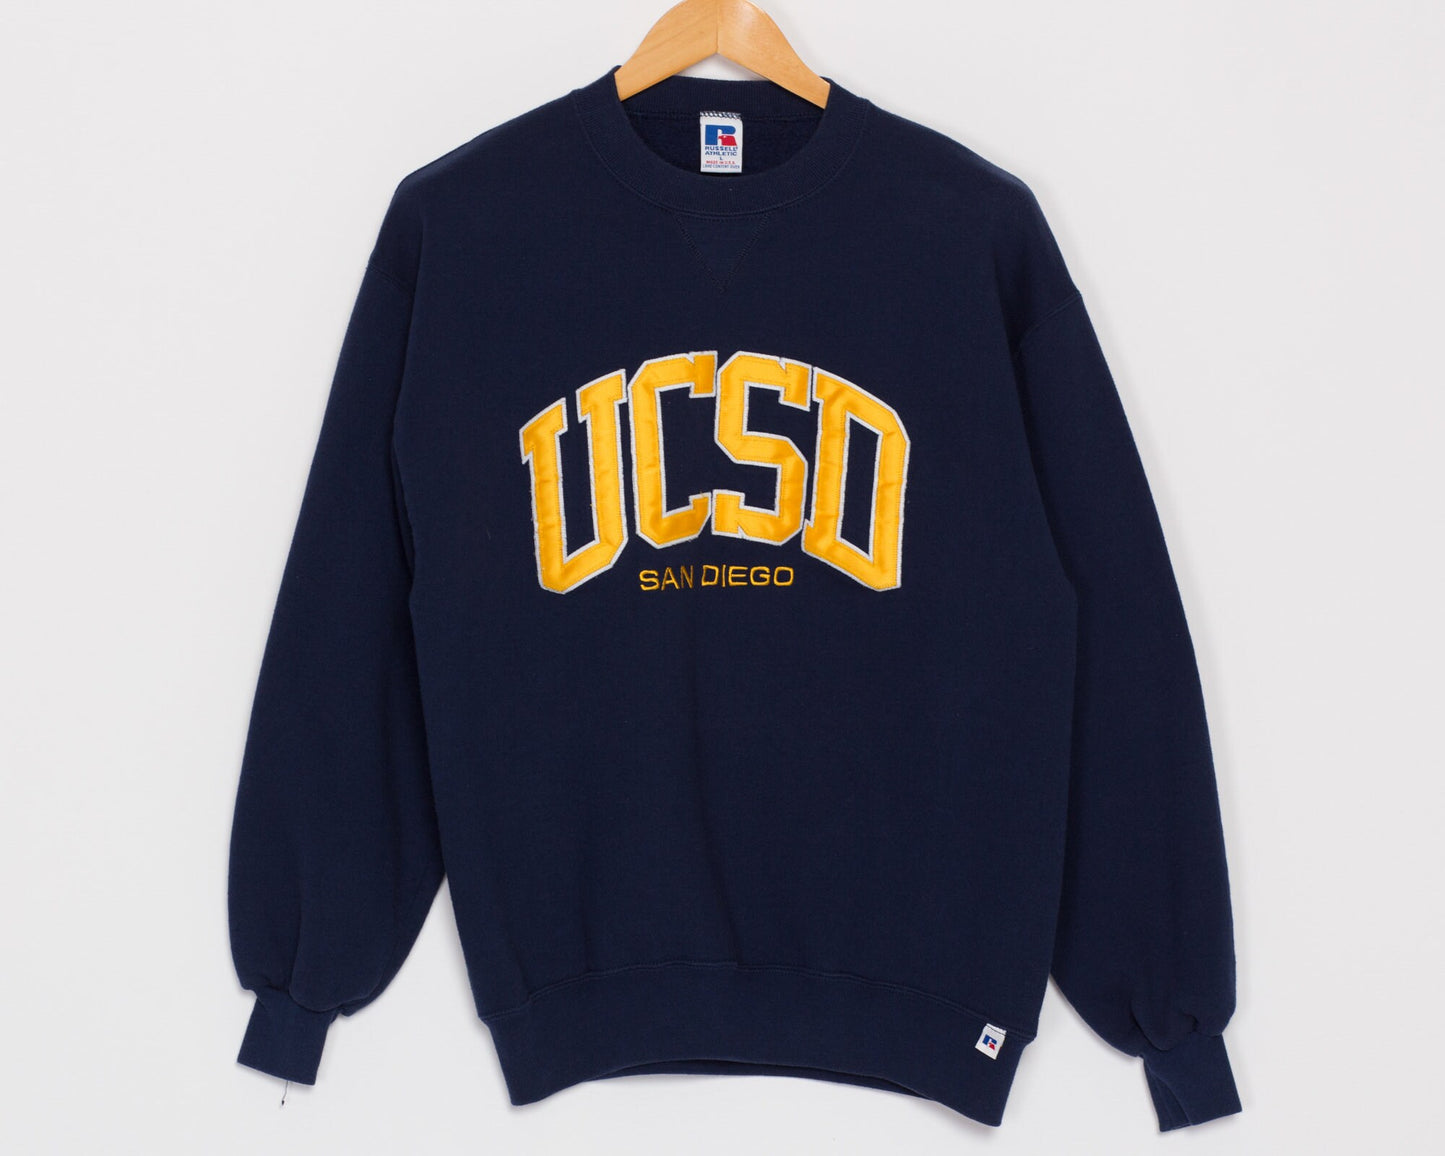 CALIFORNIA UNIVERSITY Hoodie, College Sweatshirt, Vintage Sweater, Purple  Jumper, Unisex, Size L 